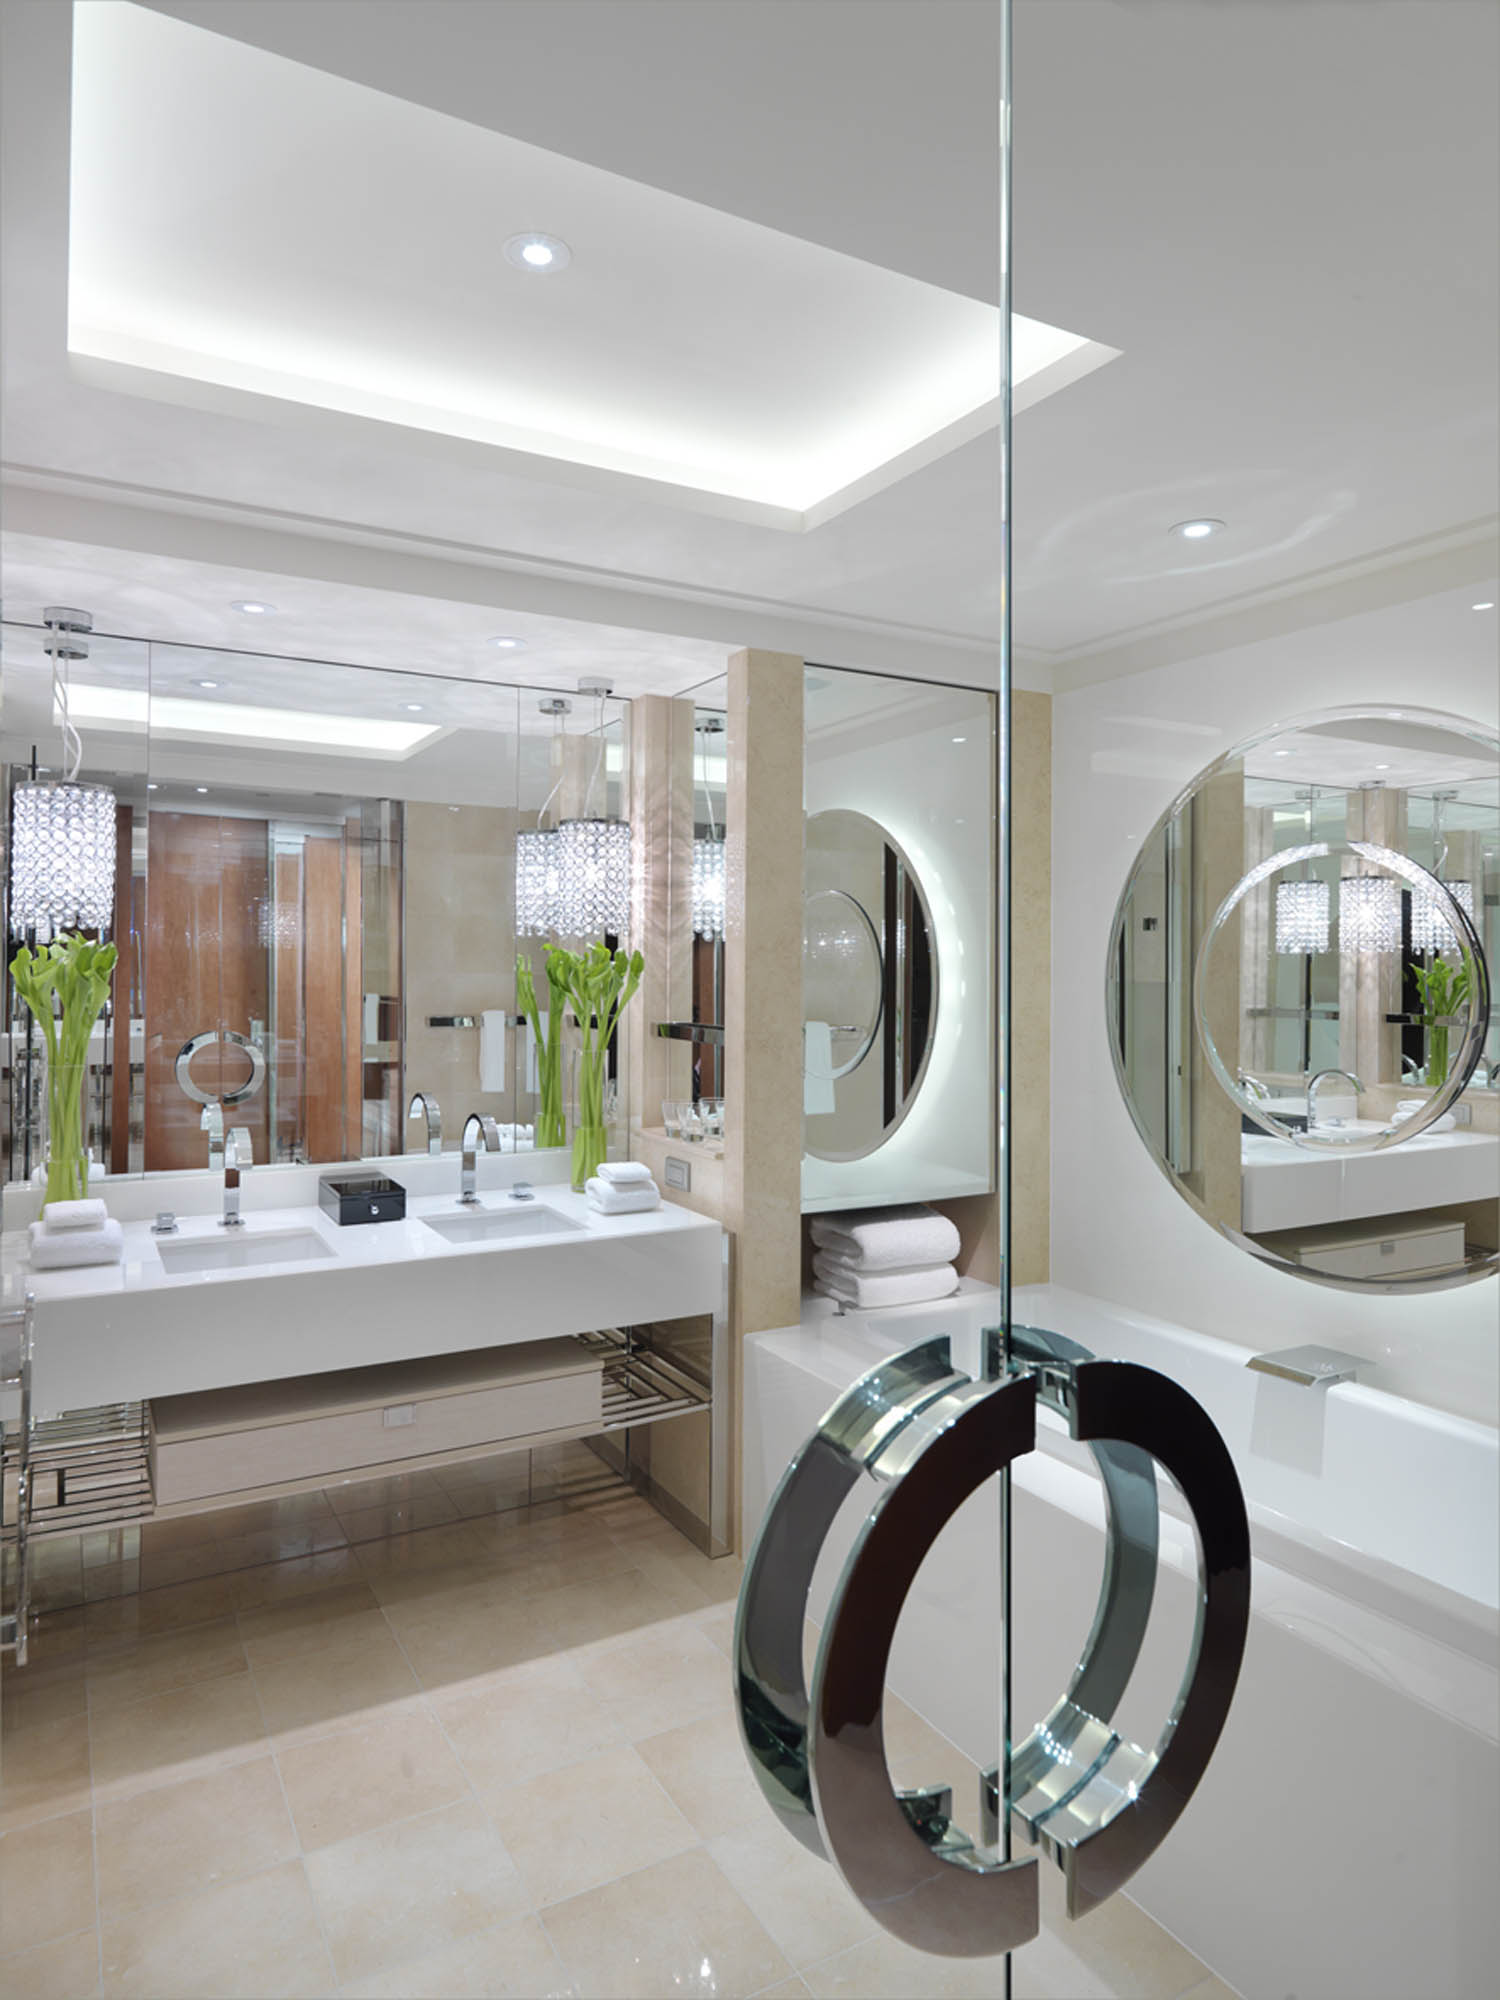 crown towers hotel fitout melbourne crown casino bathroom mirrors recessed lighting bathtub vanity